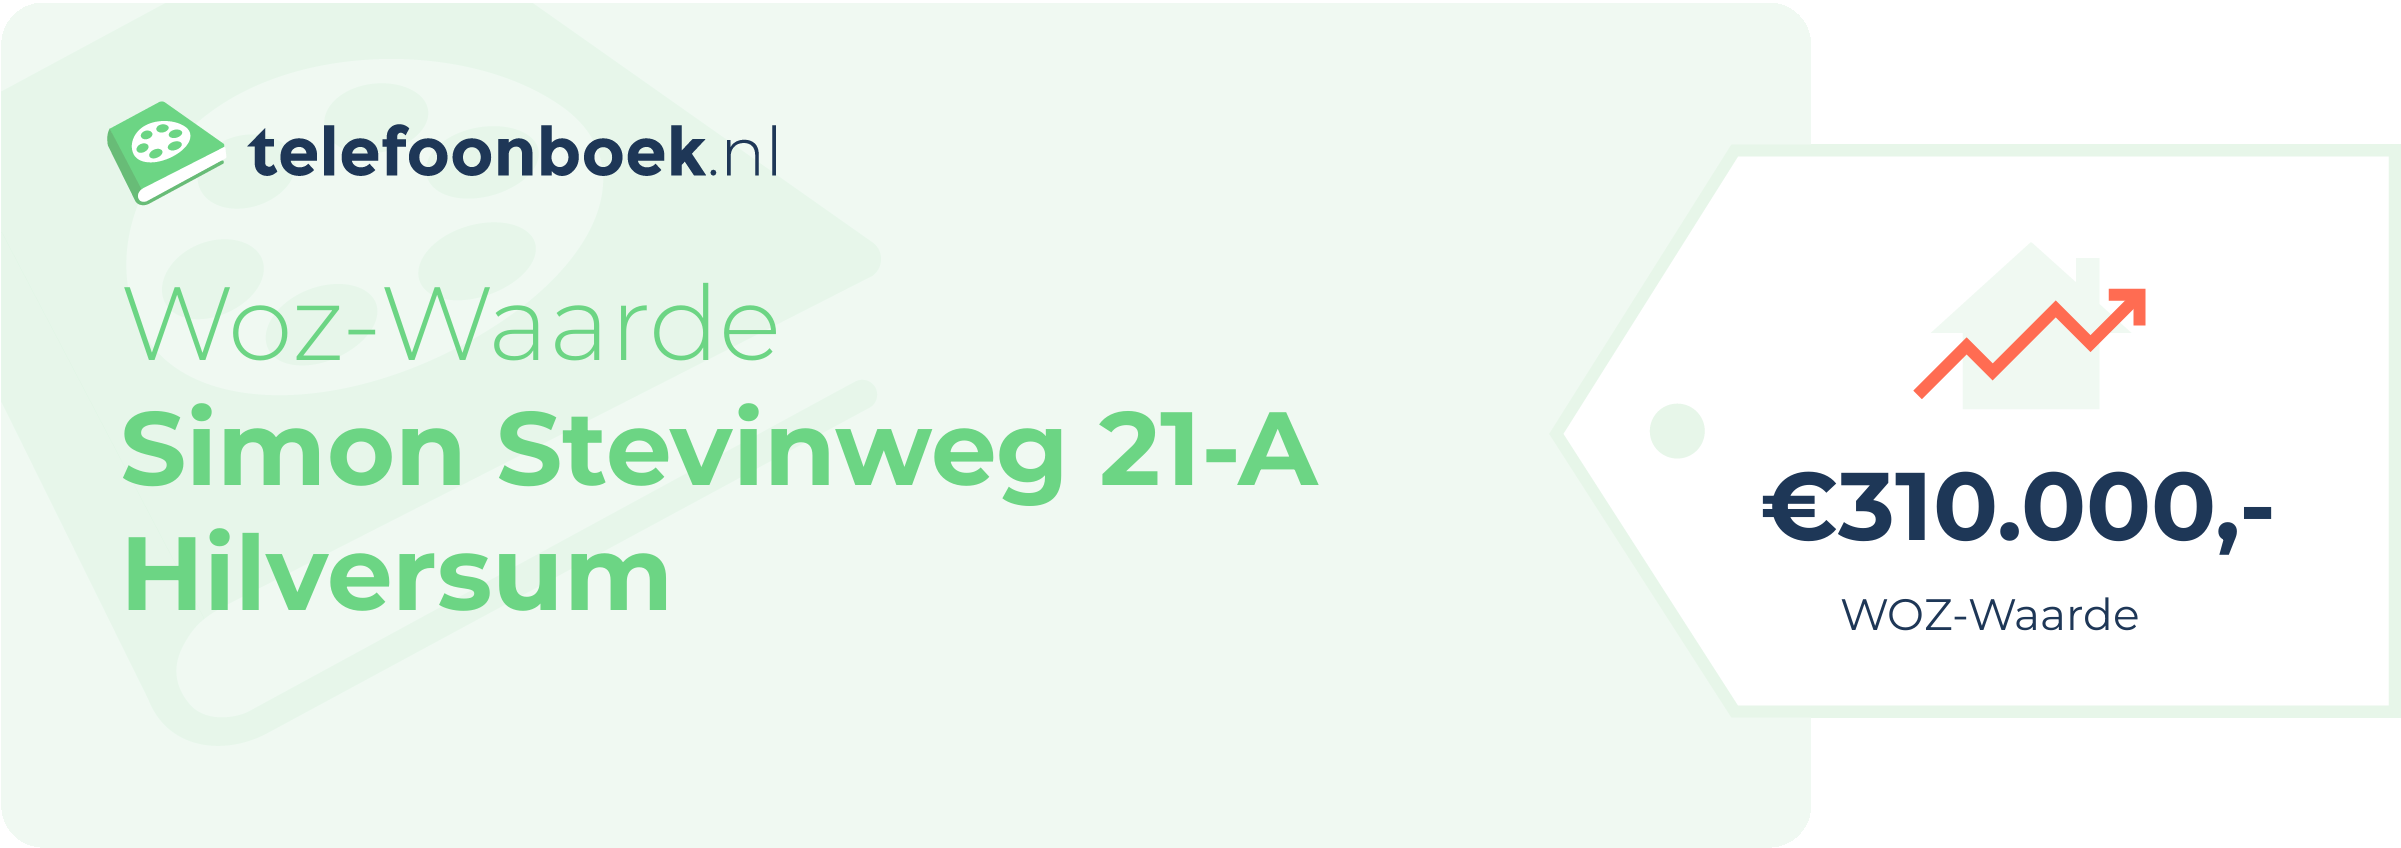 WOZ-waarde Simon Stevinweg 21-A Hilversum